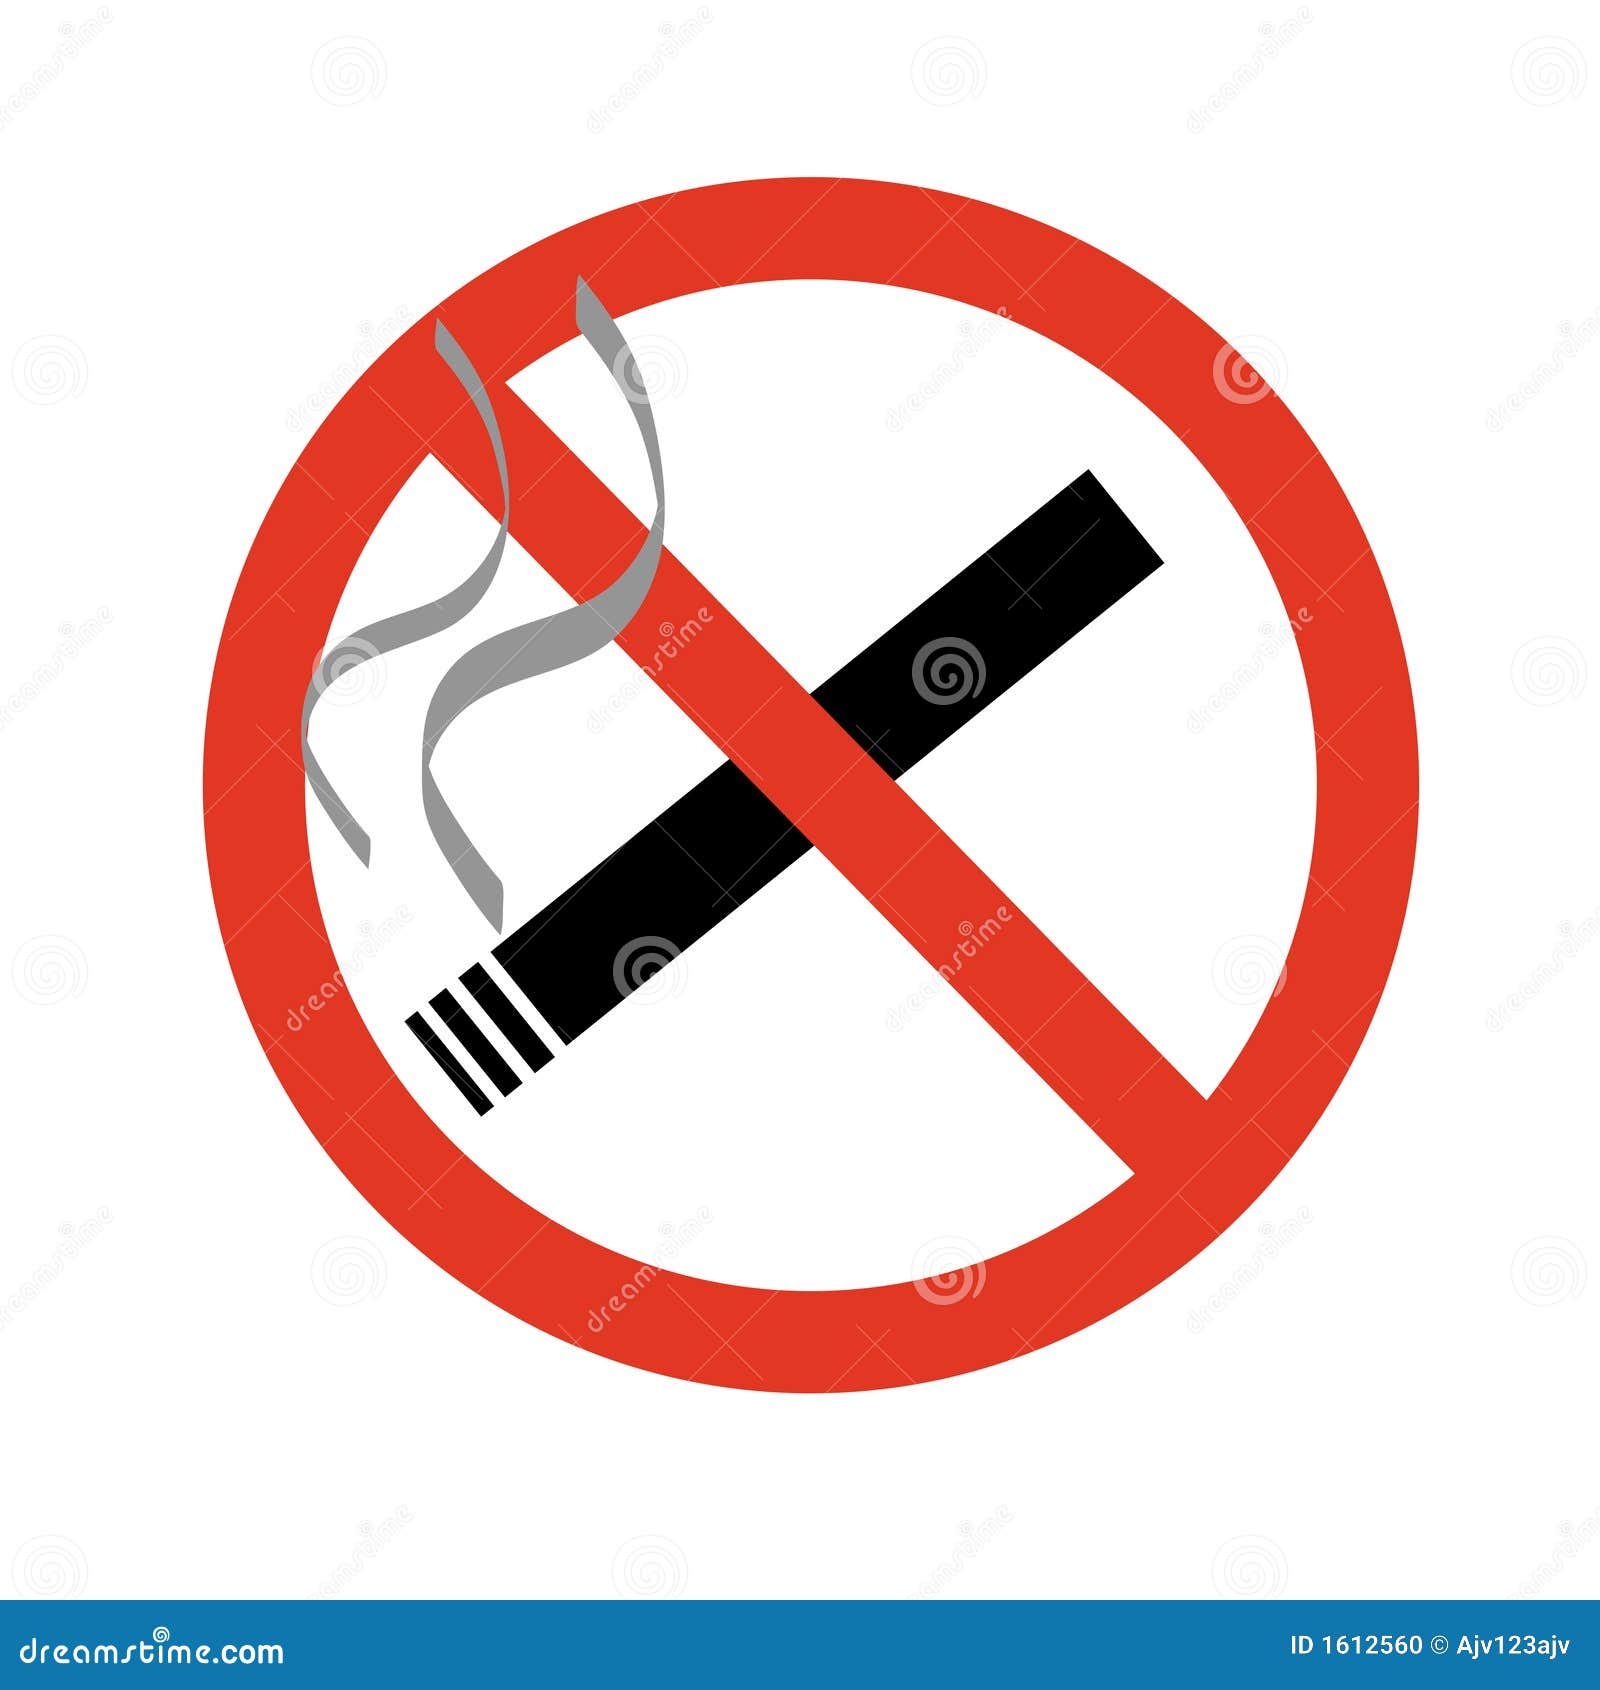 No smoking sign stock vector. Illustration of cigarettes - 1612560